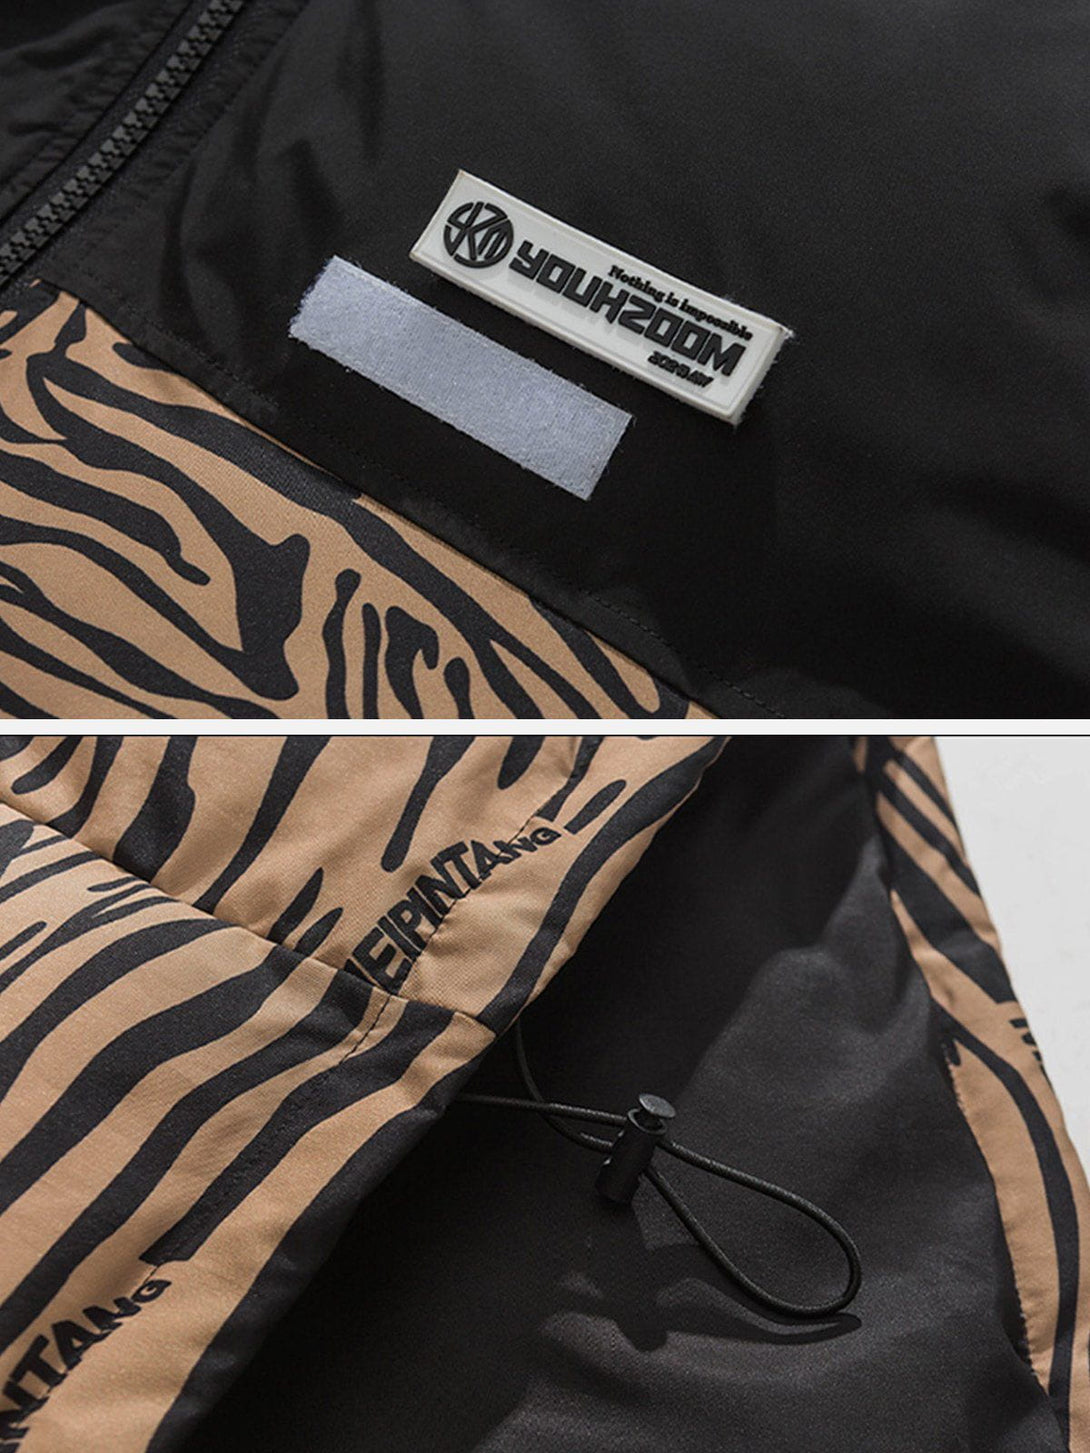 Majesda® - Zebra Print Down Coat outfit ideas streetwear fashion